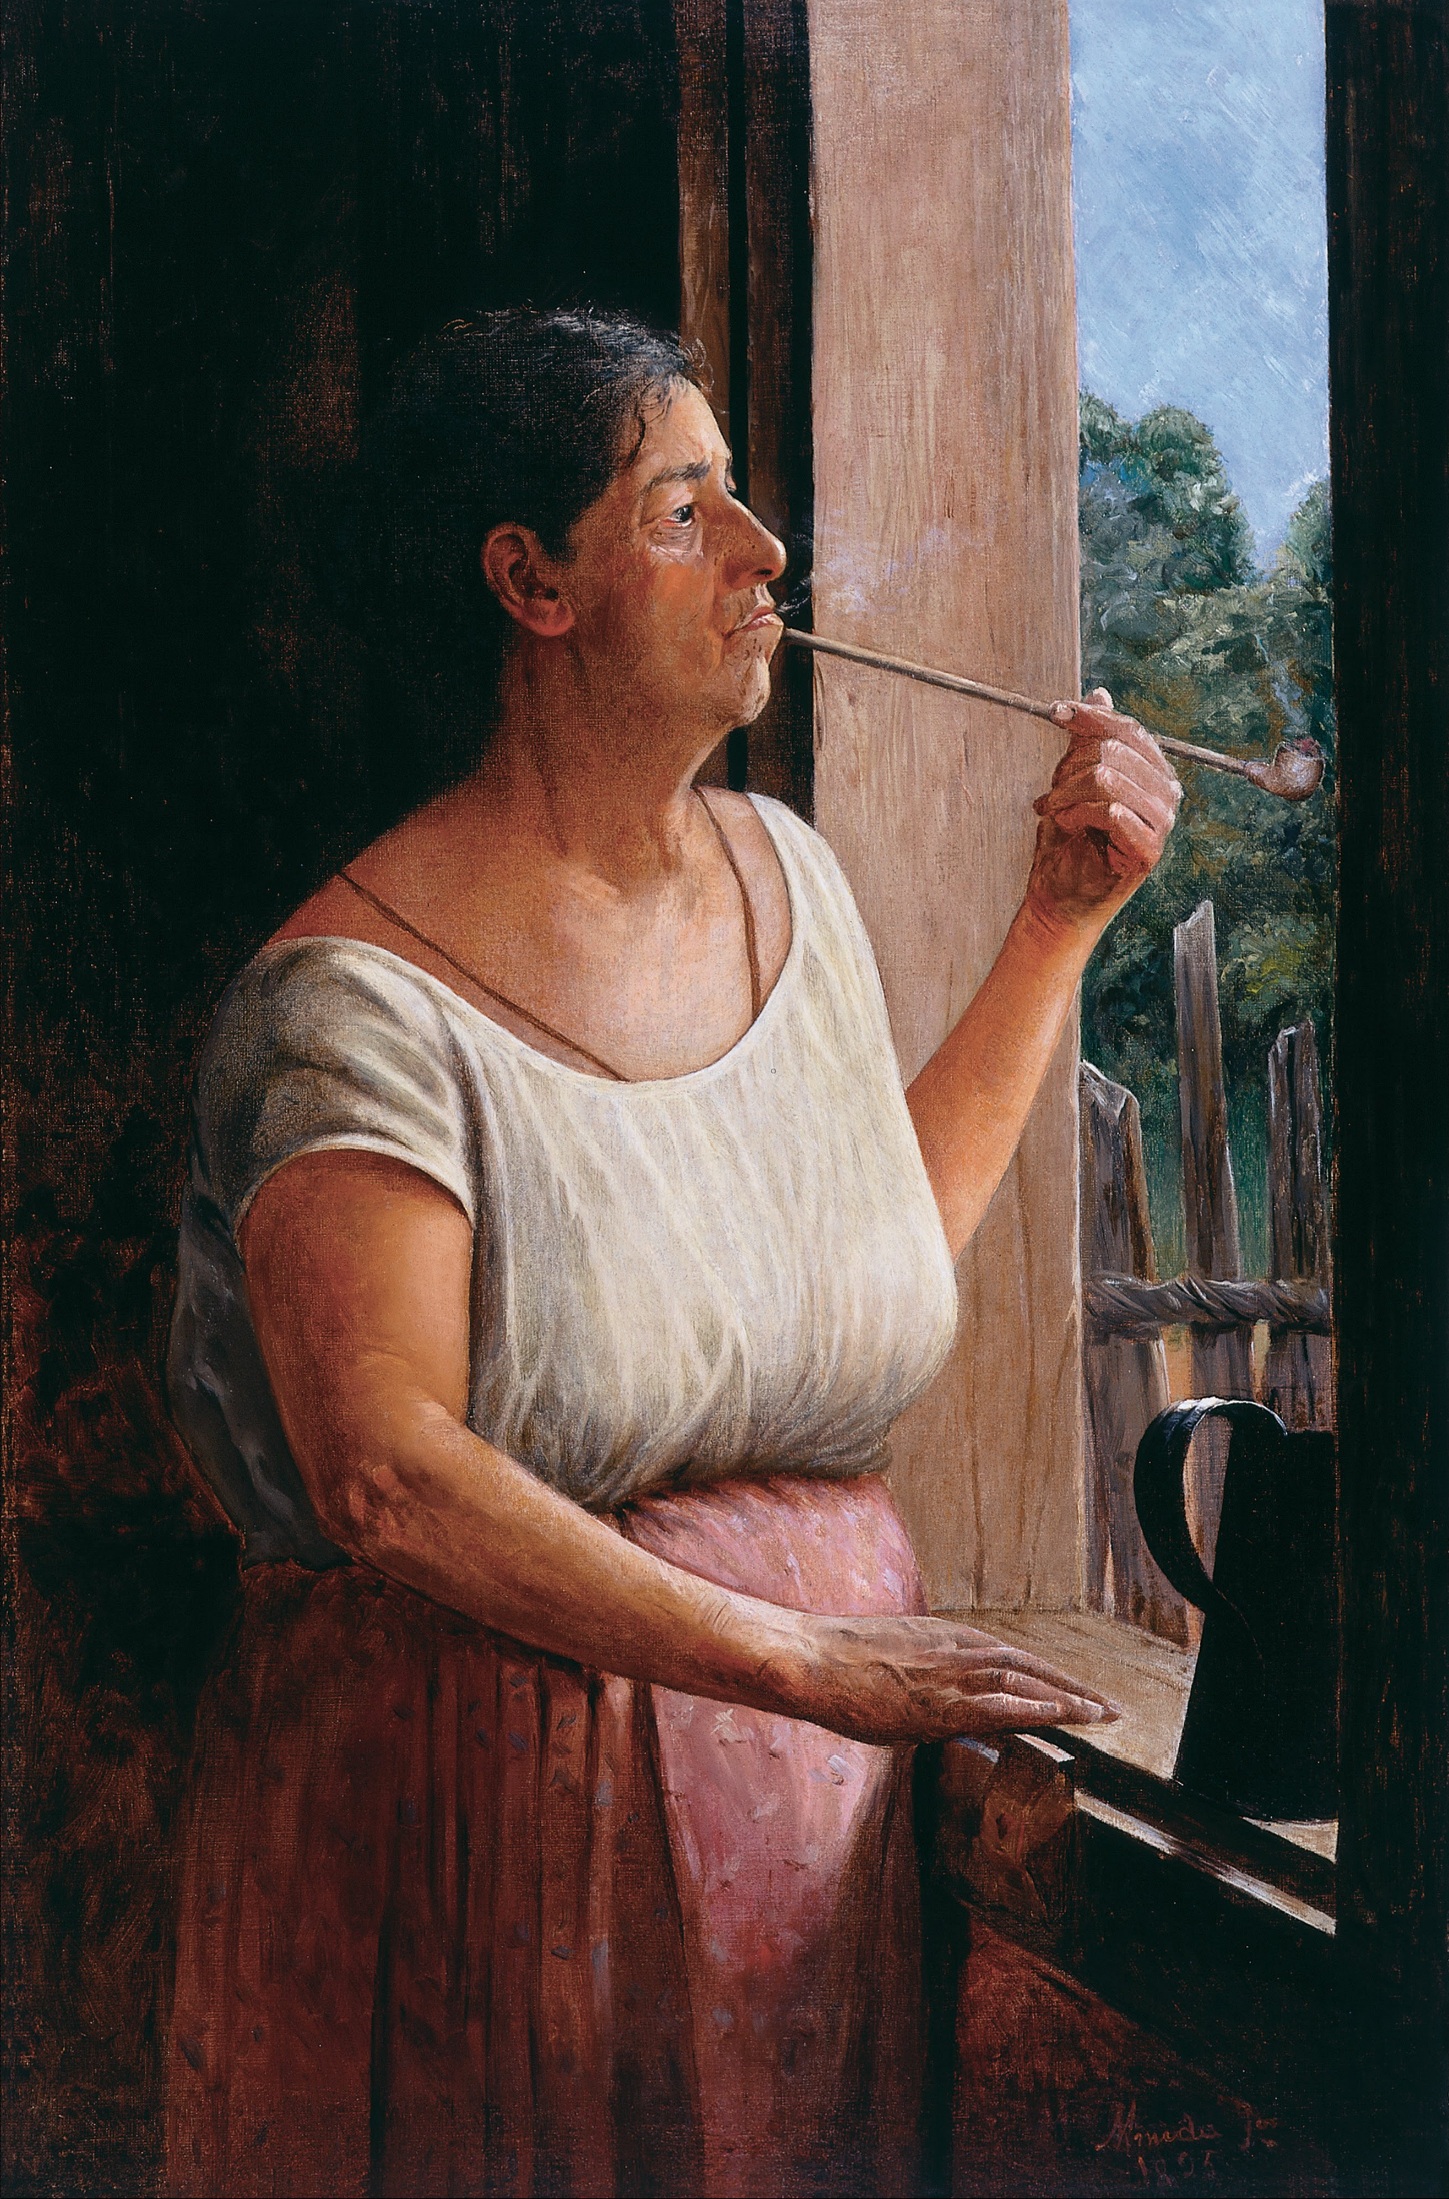 Ња Ћика by Jose Ferraz Almeida Júnior - 1895. - 72 x 109 cm 